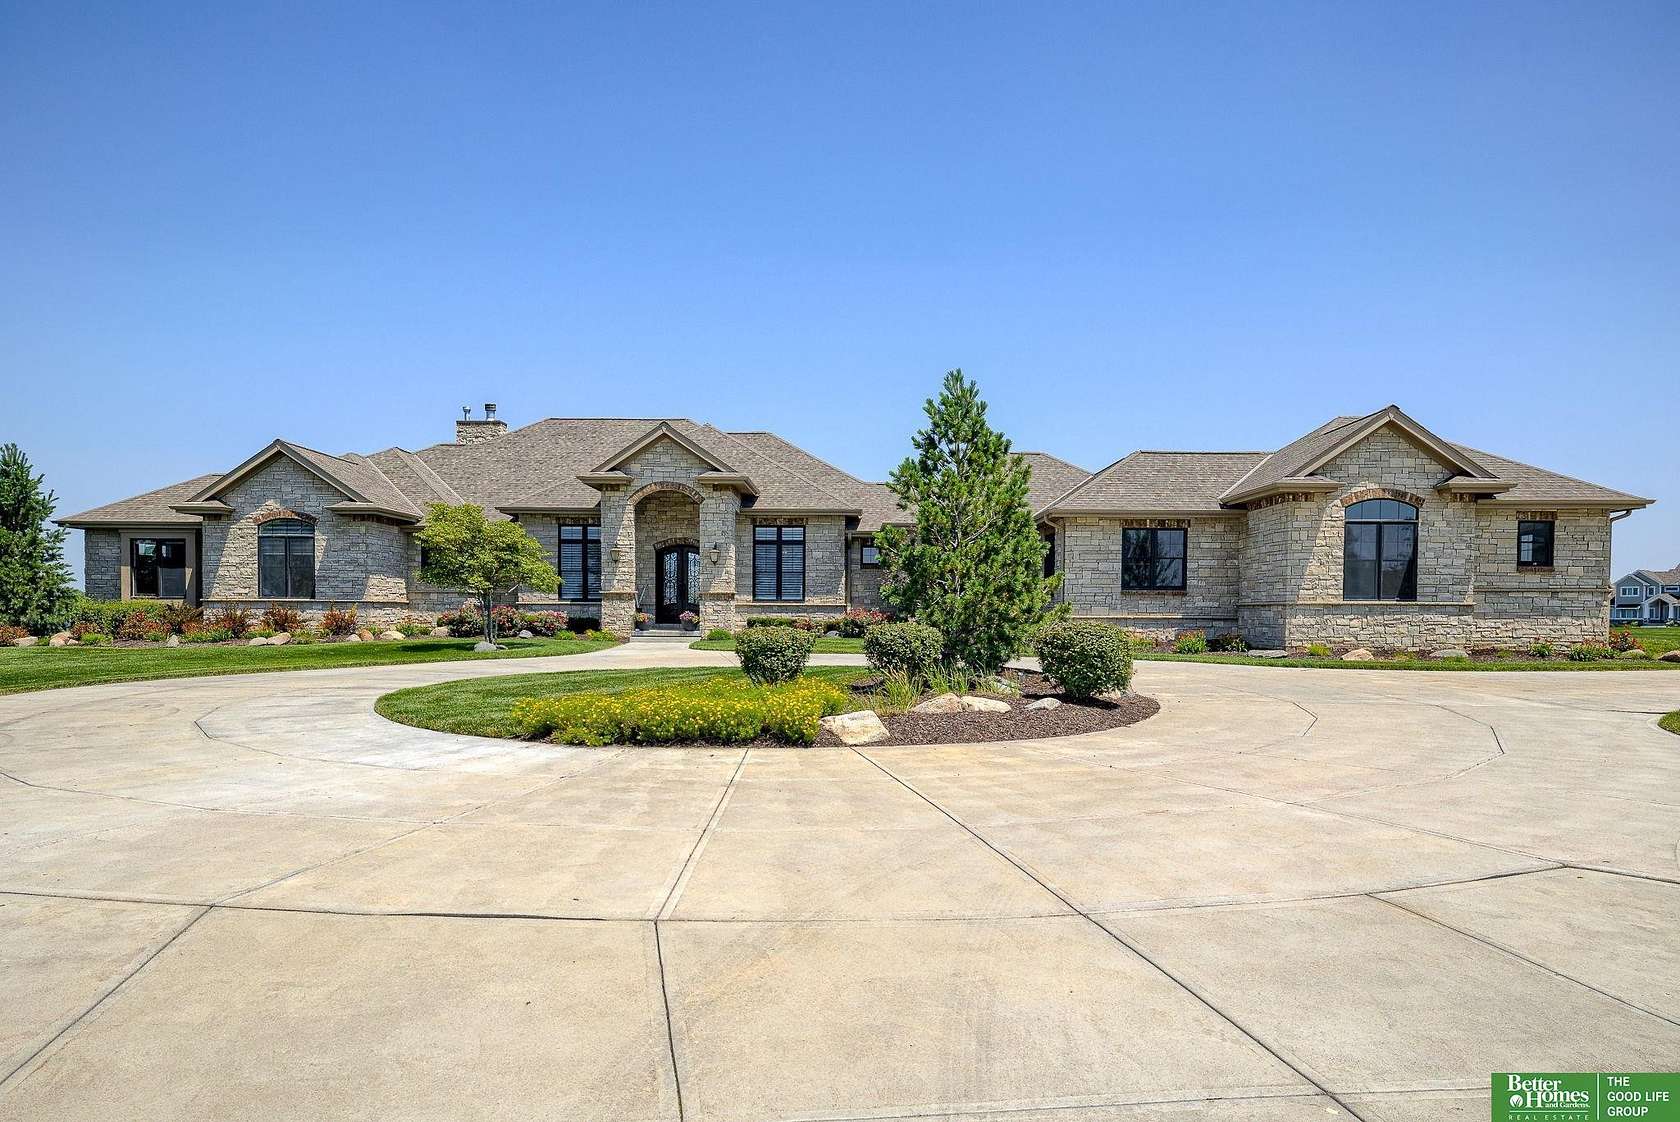 3.046 Acres of Residential Land with Home for Sale in Gretna, Nebraska